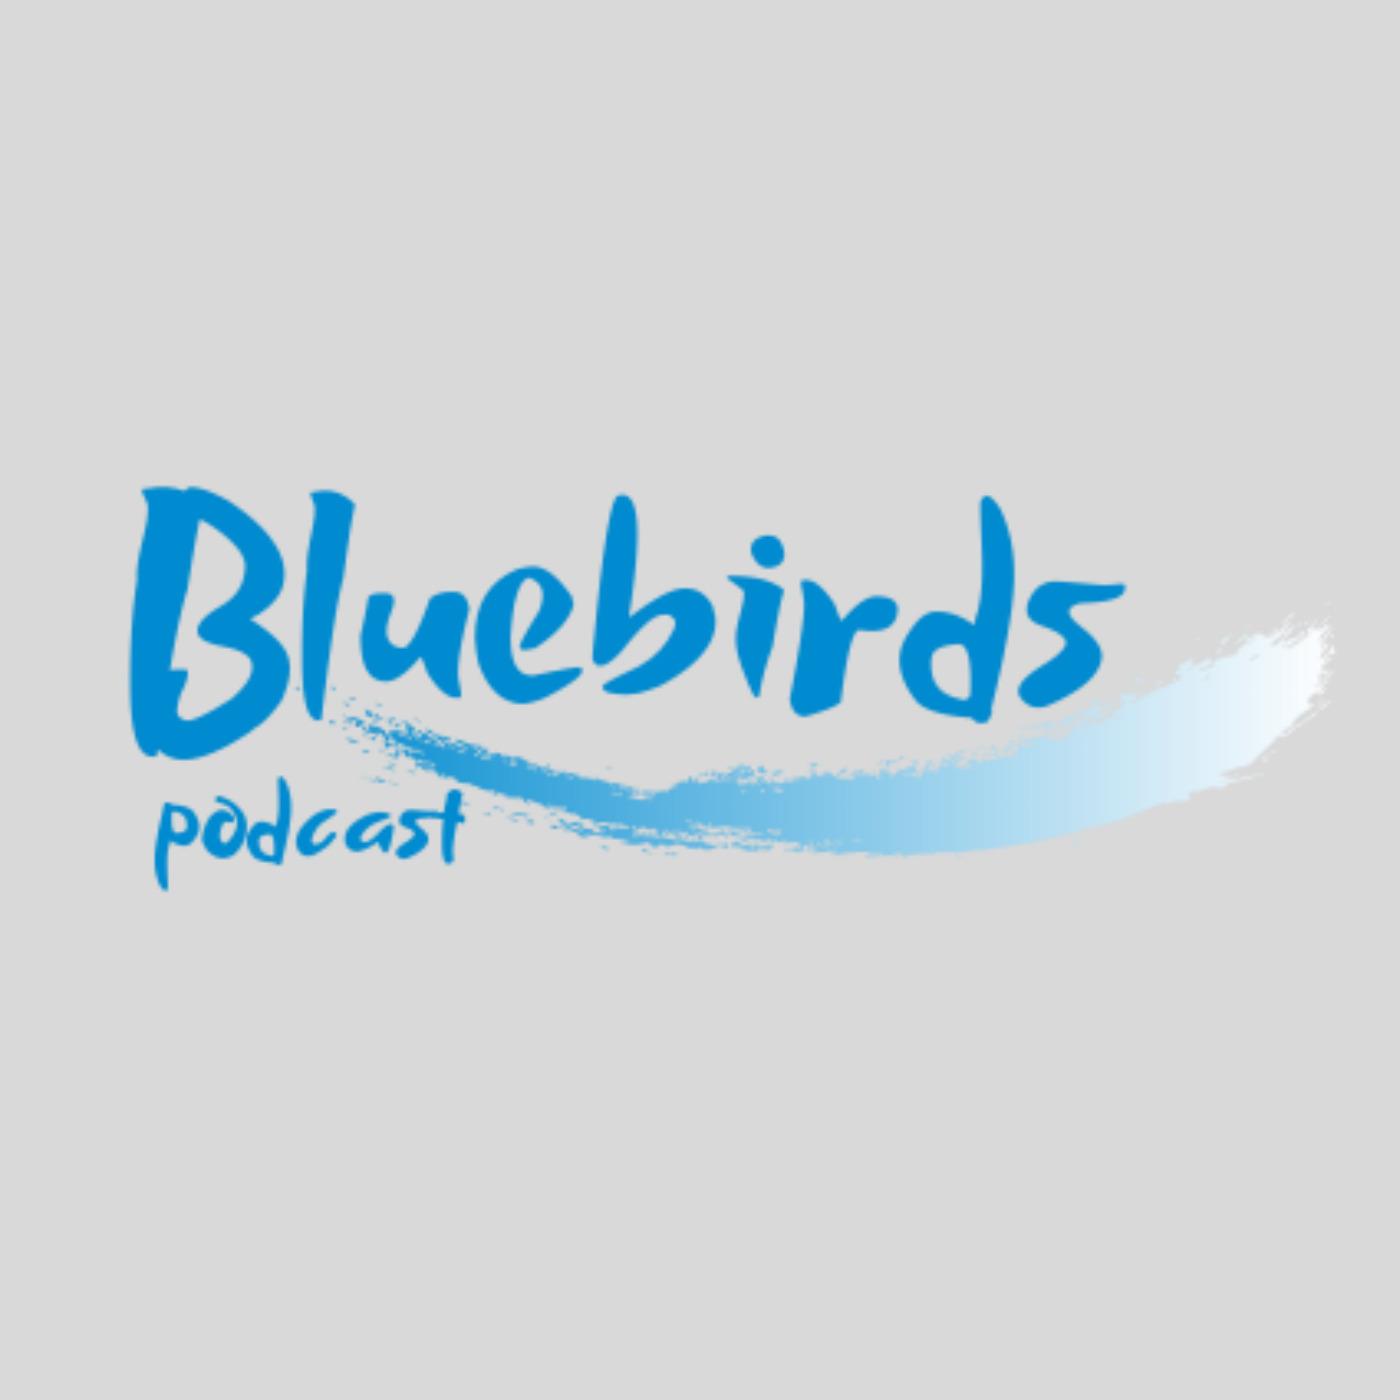 Bluebirds podcast